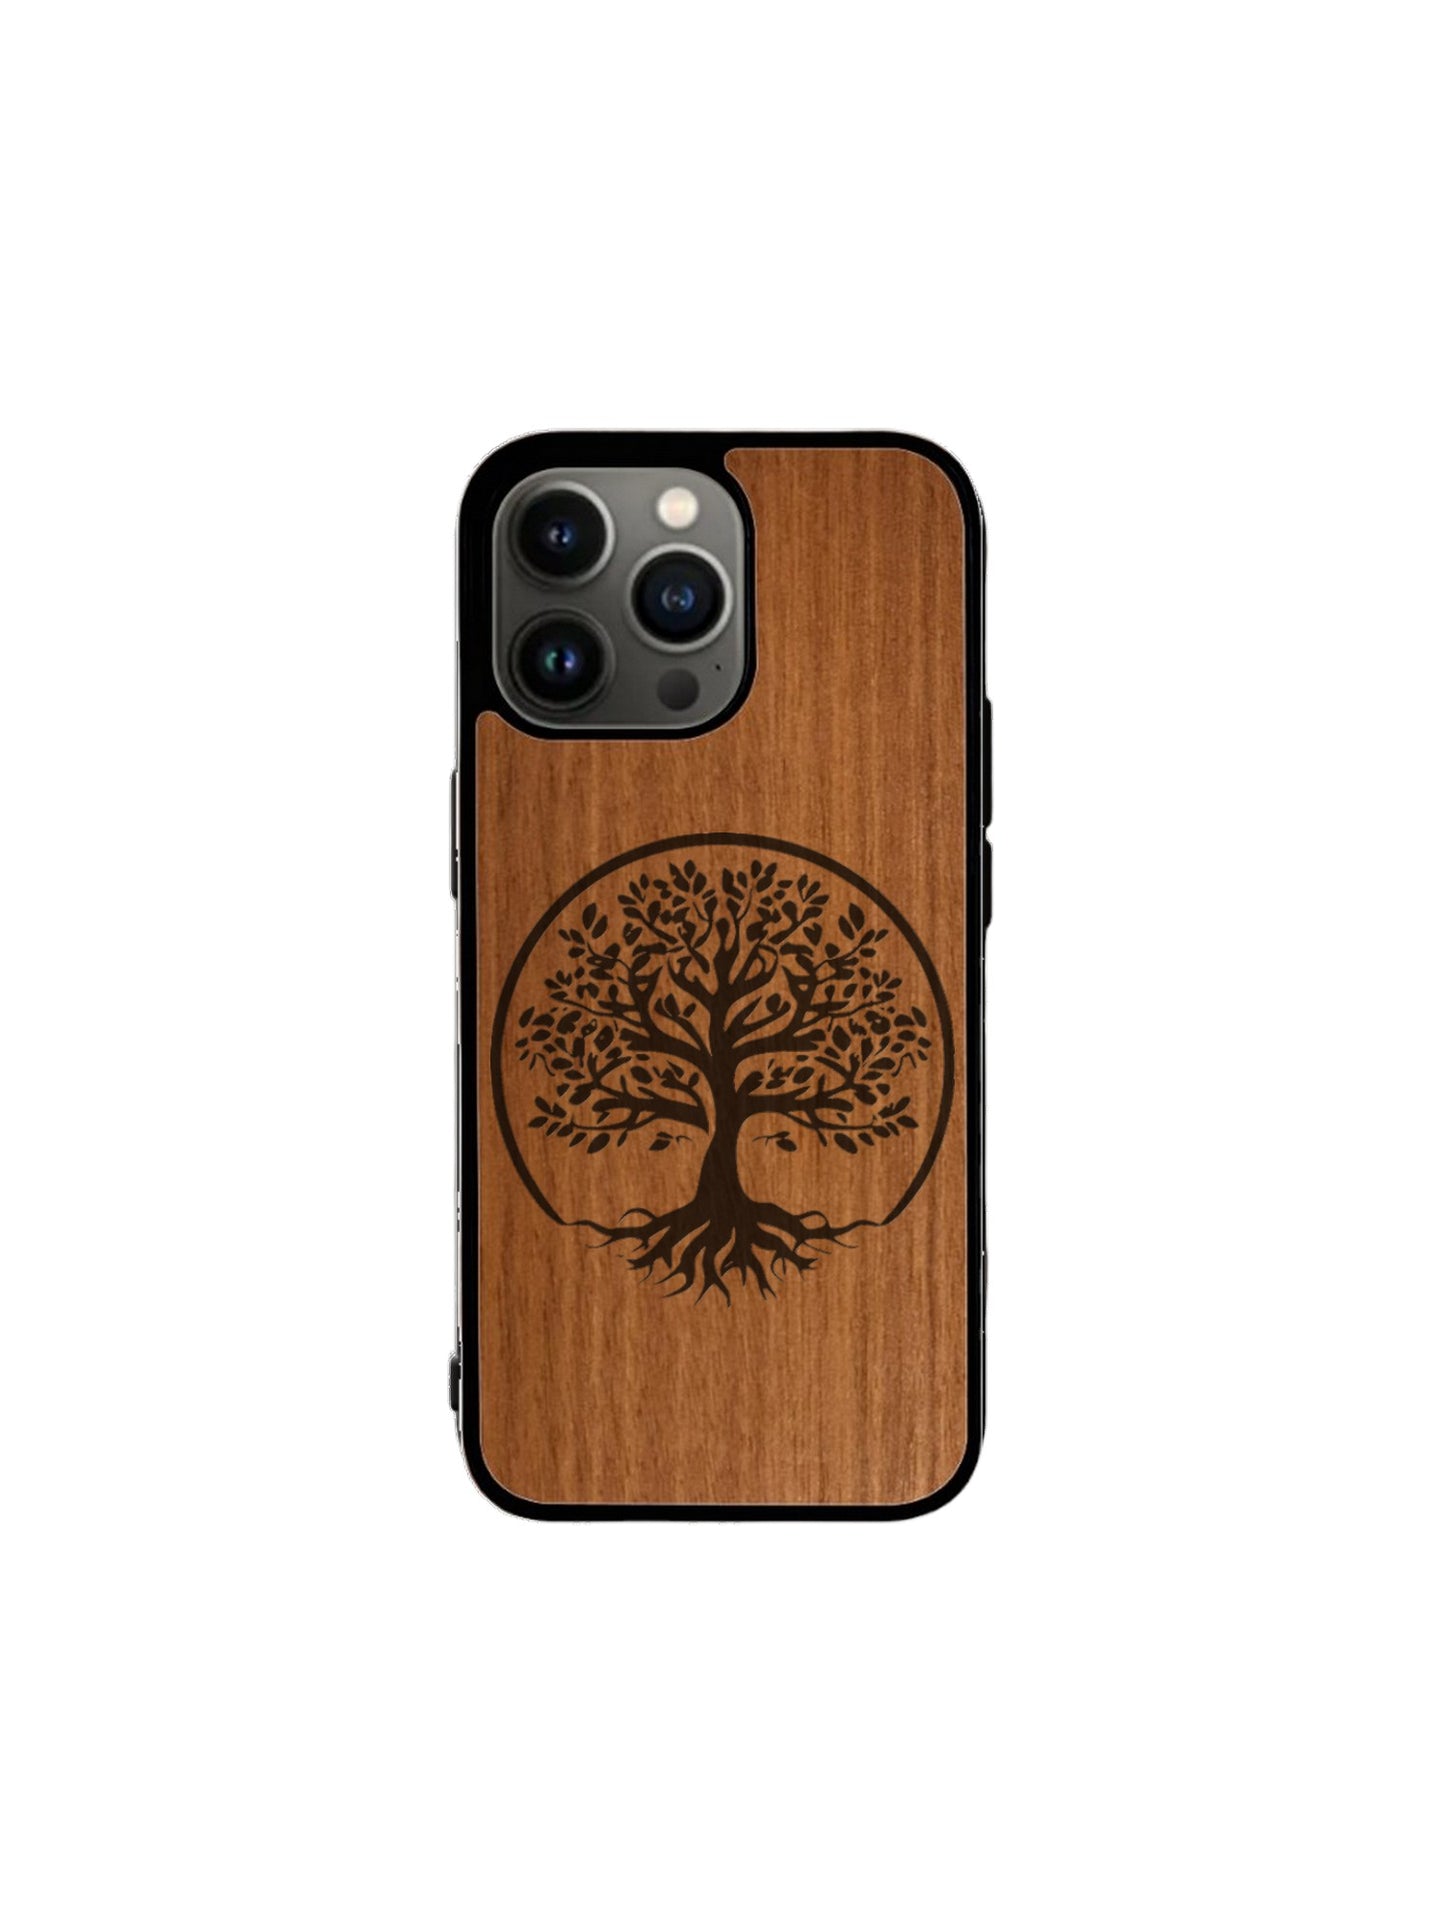 Iphone case - Tree of life